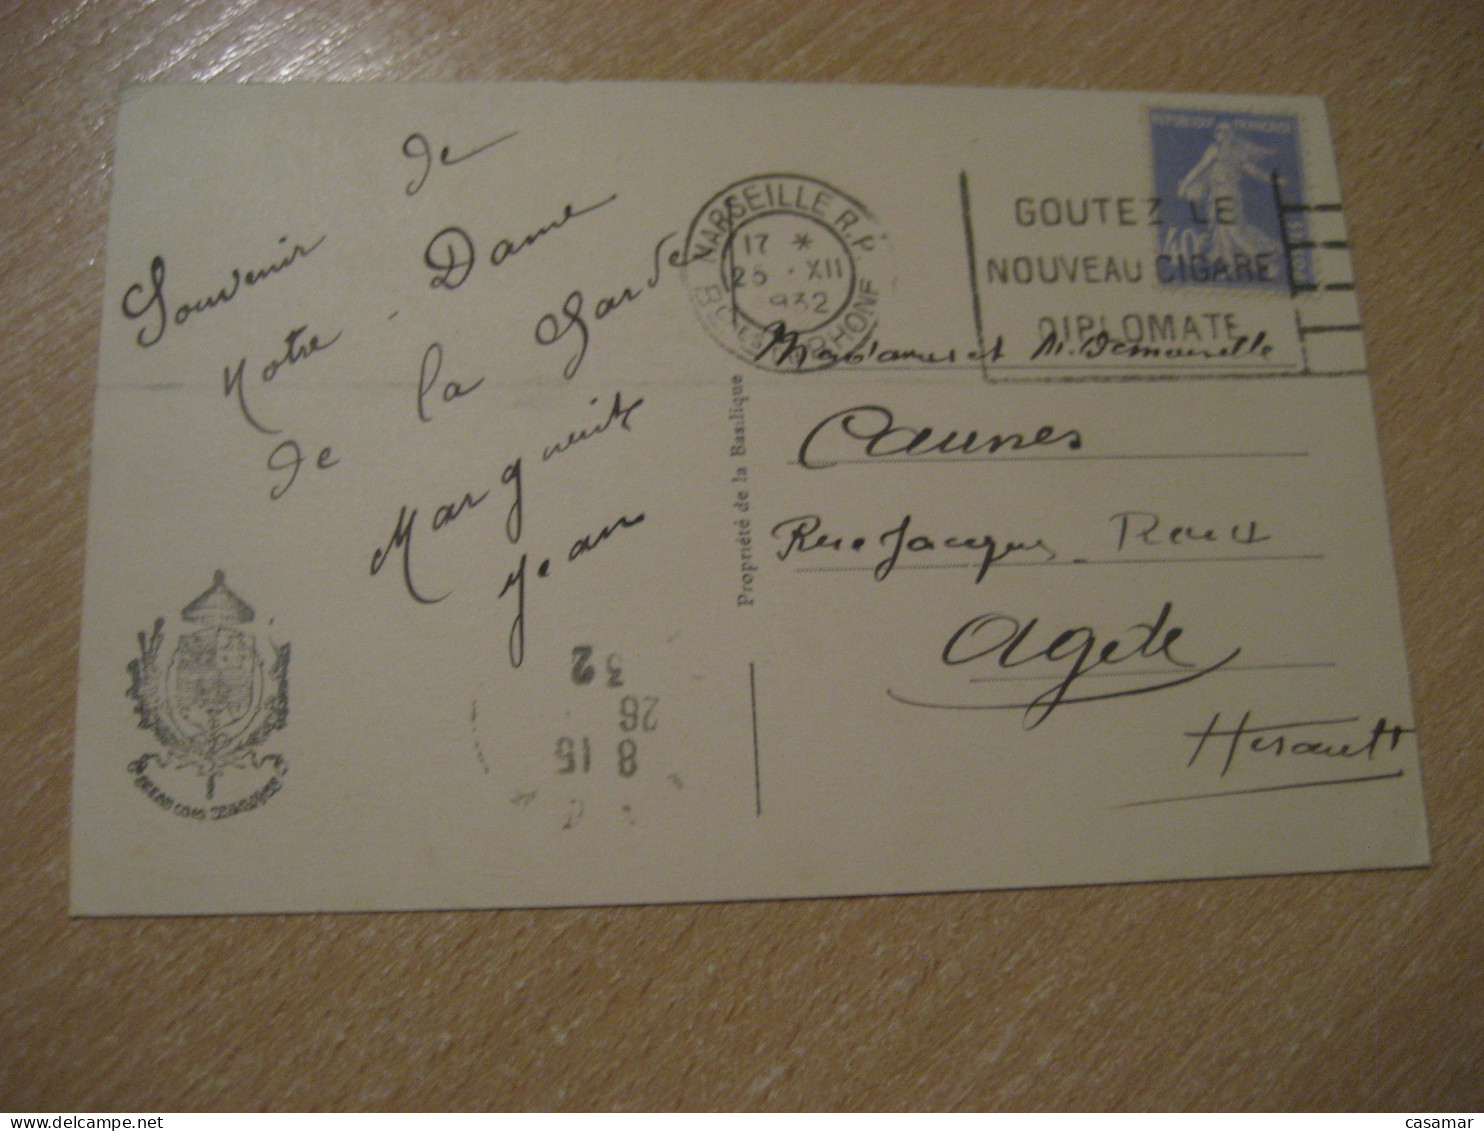 MARSEILLE 1932 To Agde Cigare Diplomade Tobacco Cancel N.D. De La Garde Postcard FRANCE - Tabacco